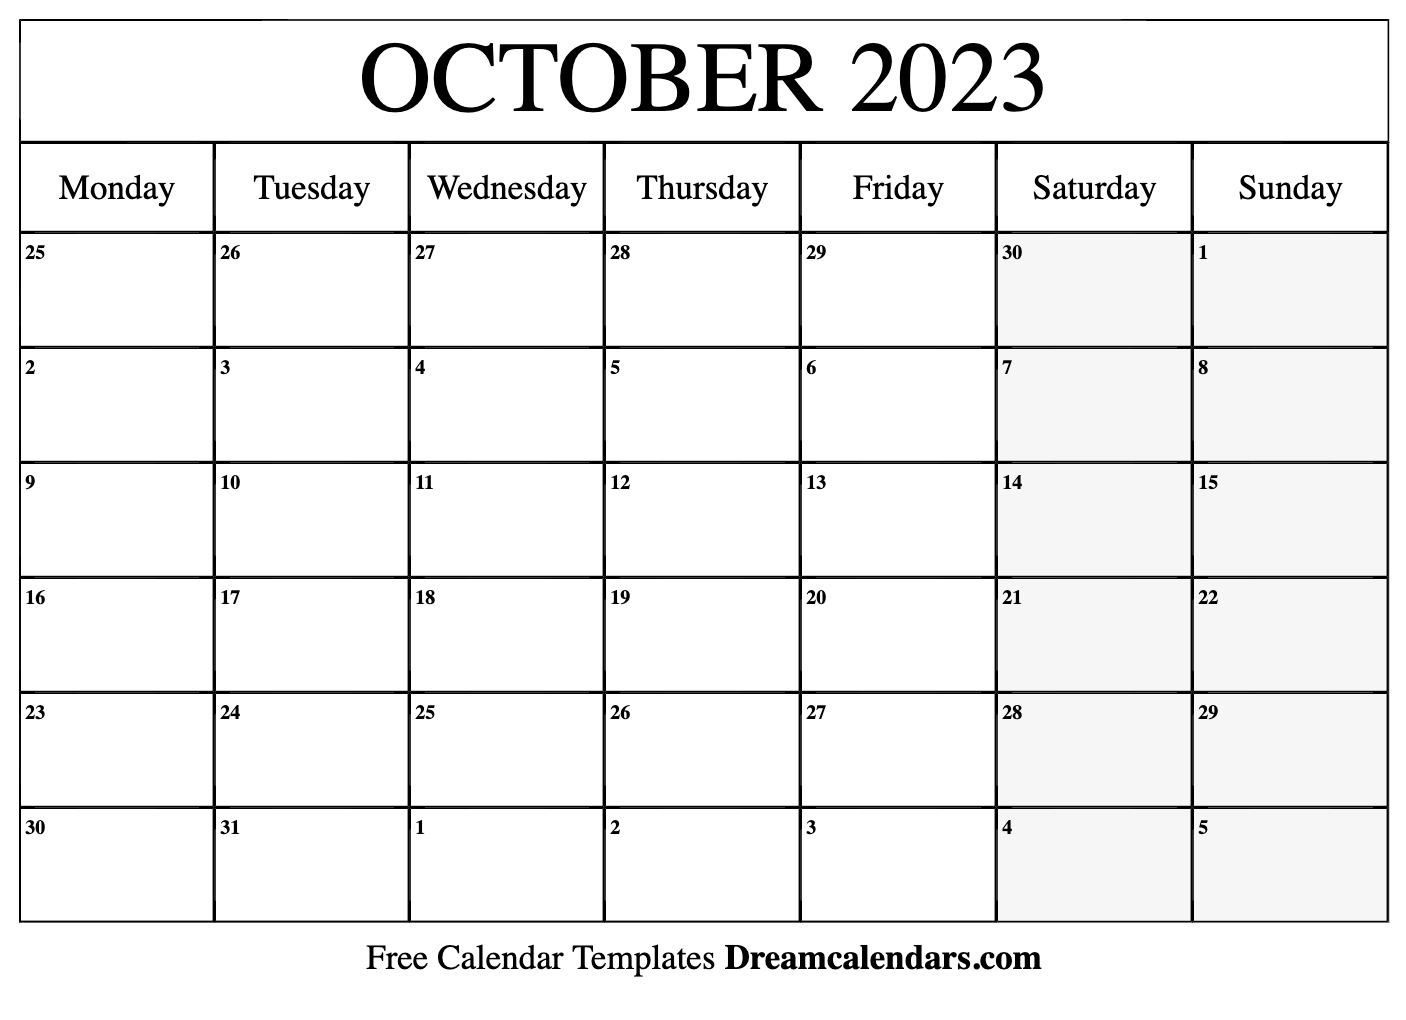 may-2023-monthly-calendar-october-2023-calendar-free-printable